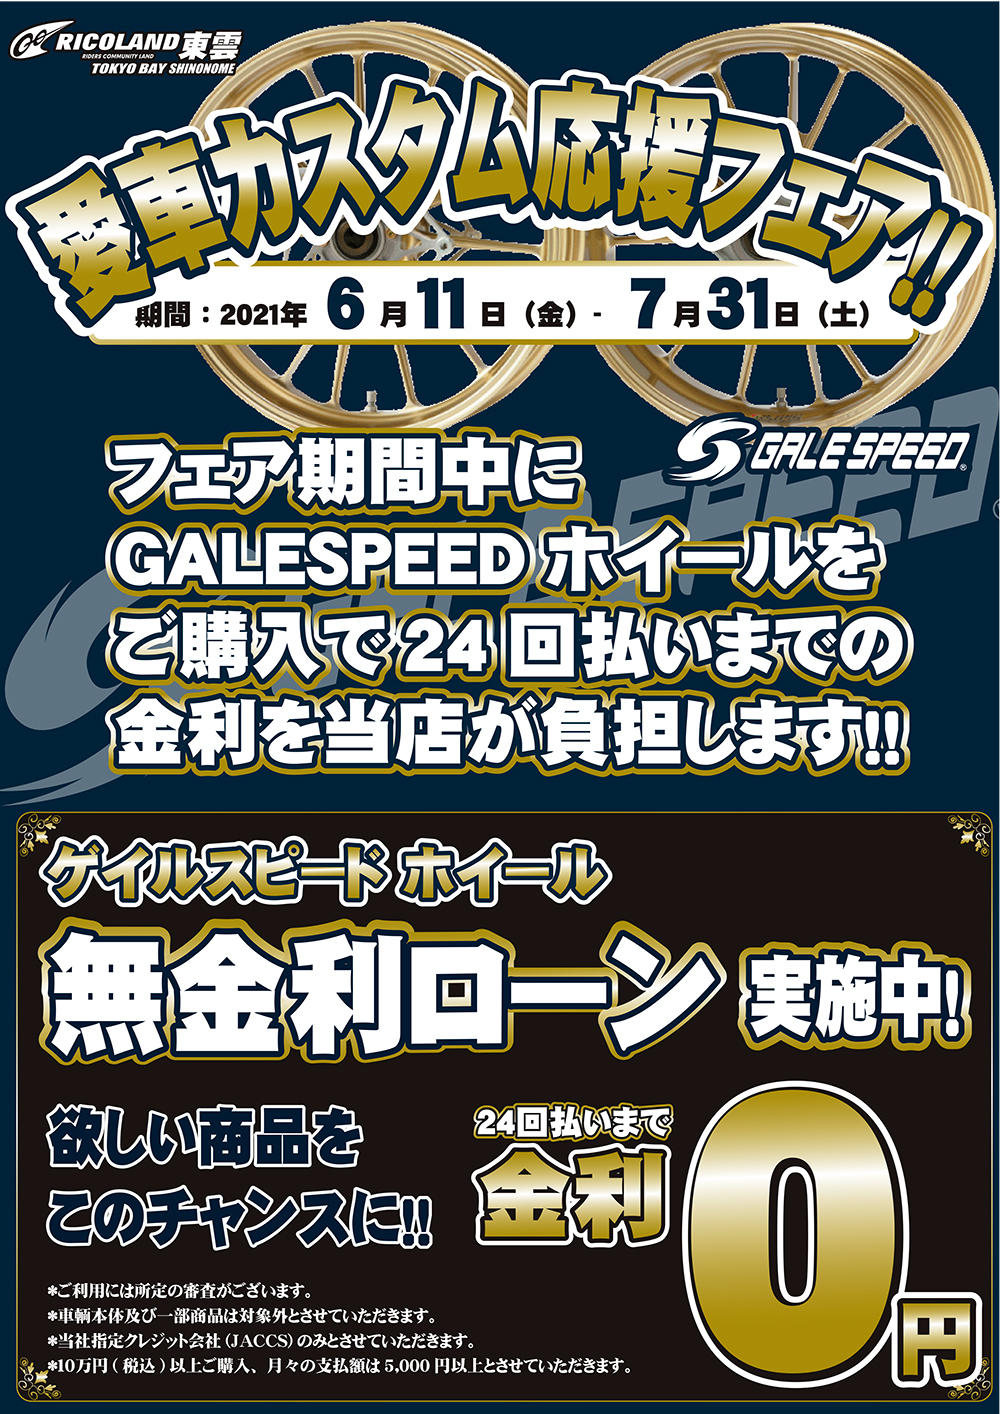 GALESPEED金利0円キャンペーン縦POP（SNS用）.jpg